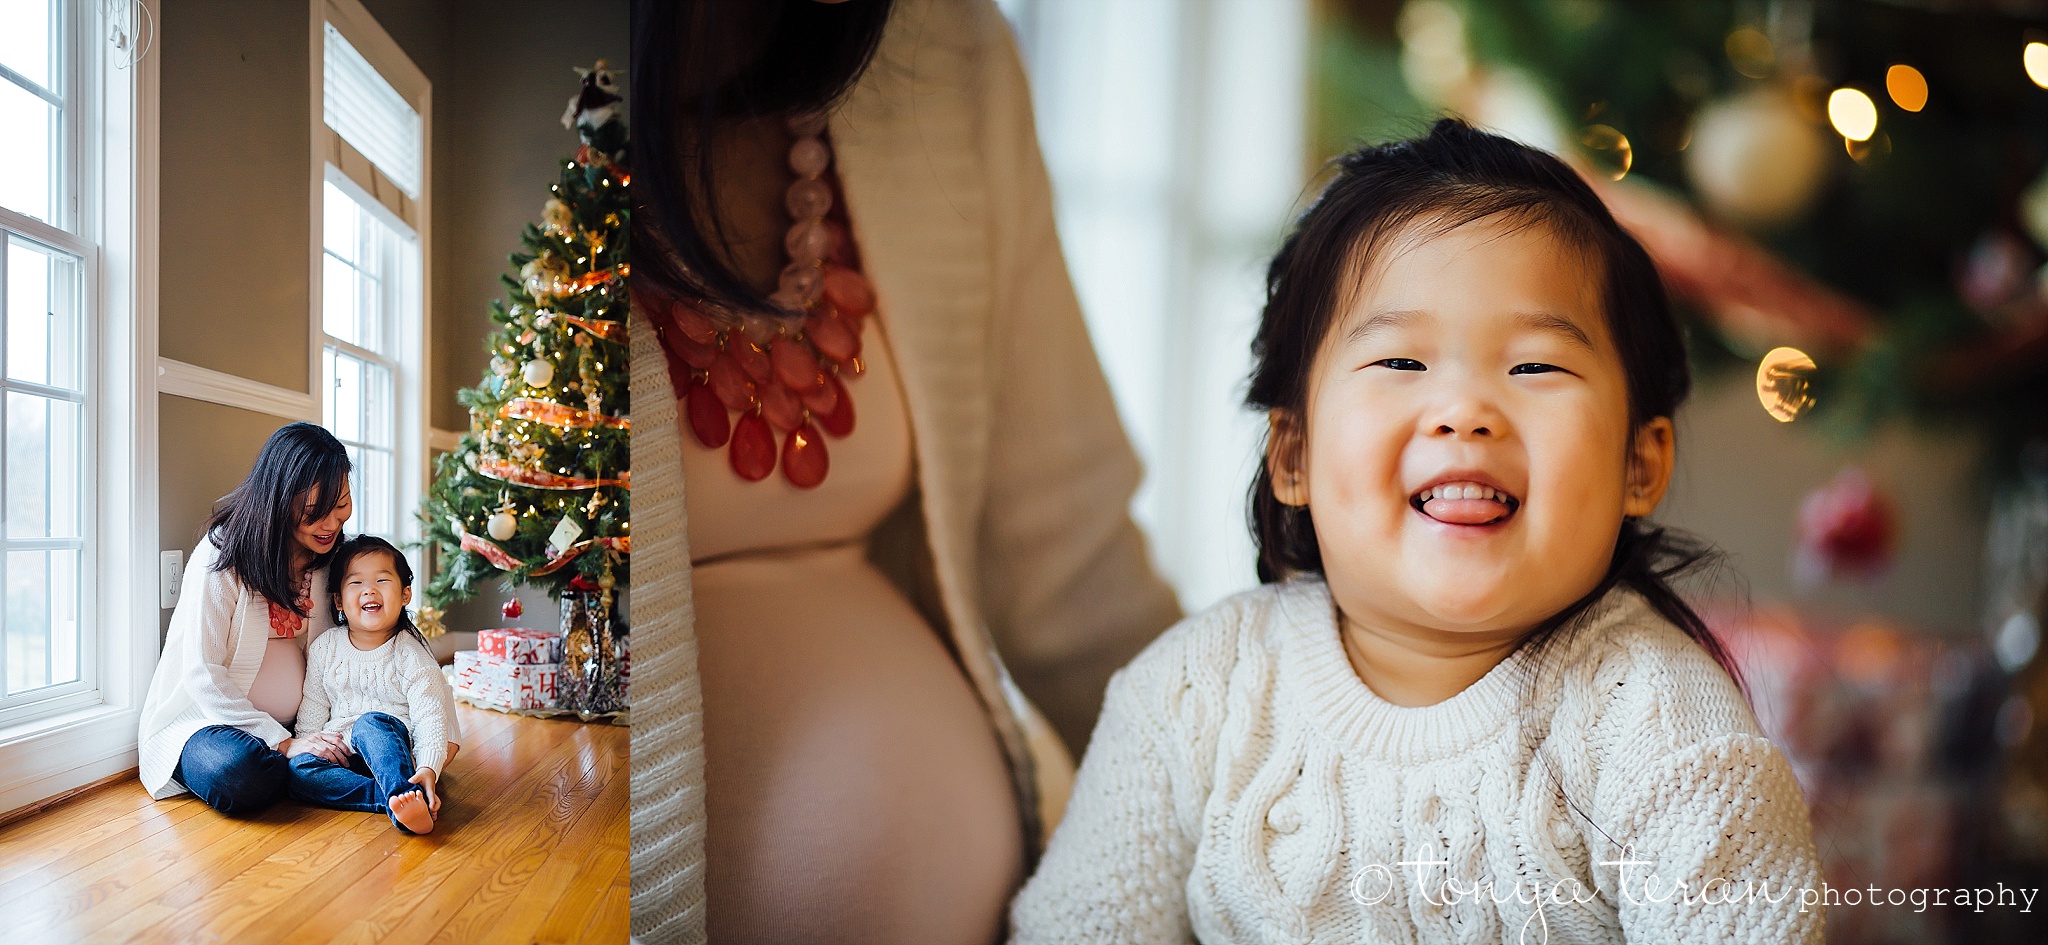 Lifestyle Family Christmas Maternity Photo Session | Tonya Teran Photography, Gaithersburg, MD Newborn, Baby, and Family Photographer